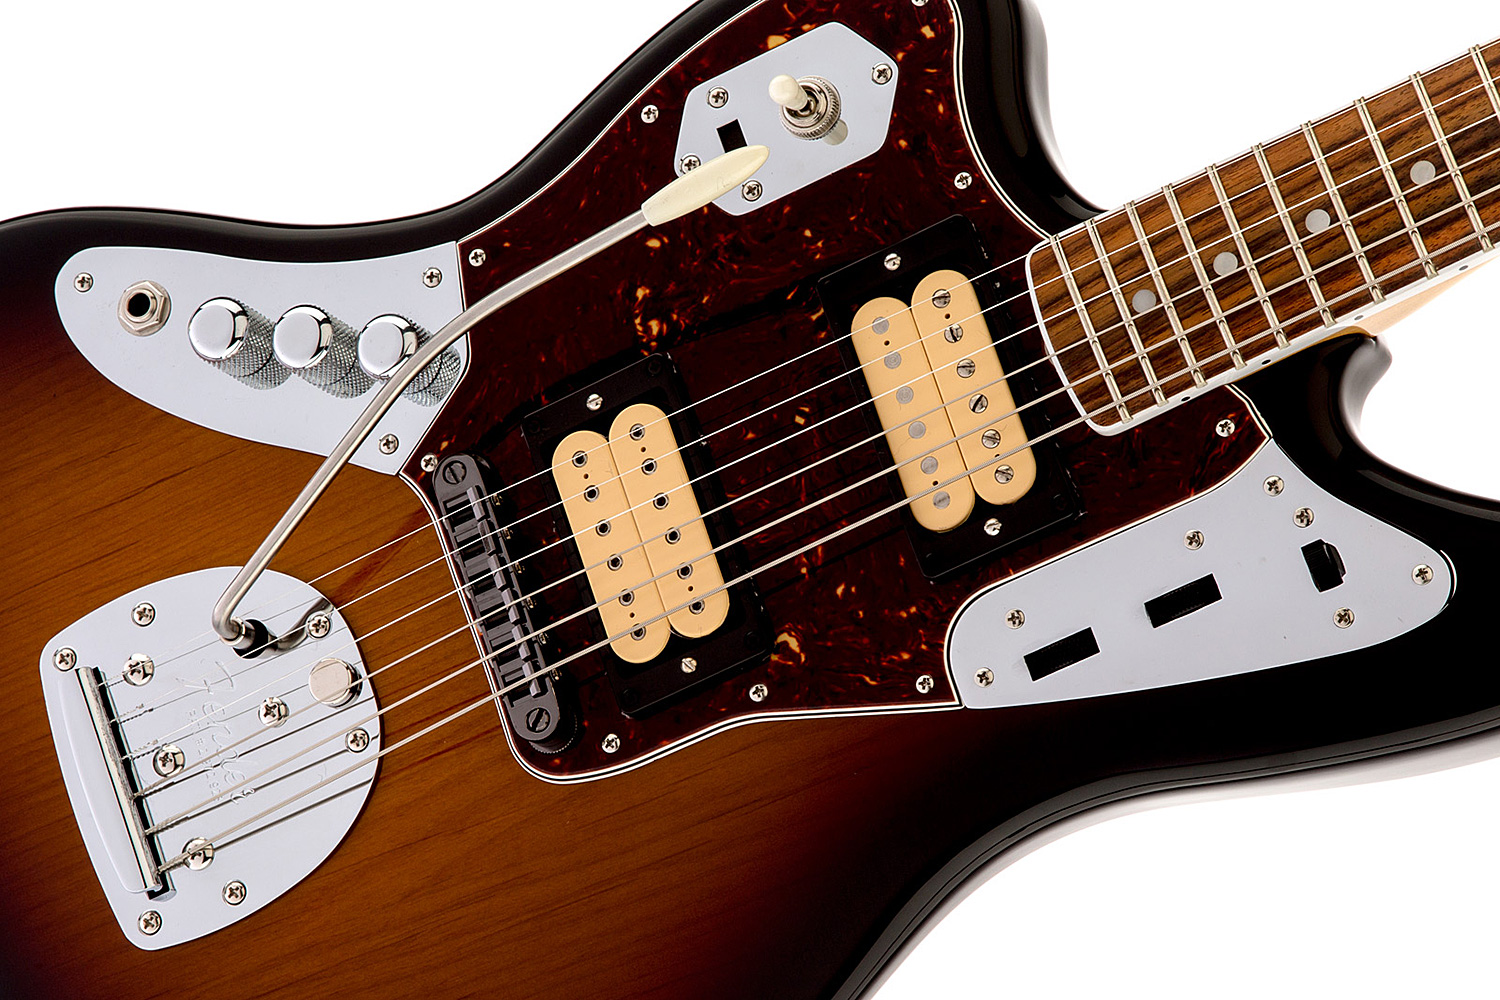 Fender Kurt Cobain Jaguar Lh Gaucher Mex Hh Trem Rw - 3-color Sunburst - Left-handed electric guitar - Variation 3